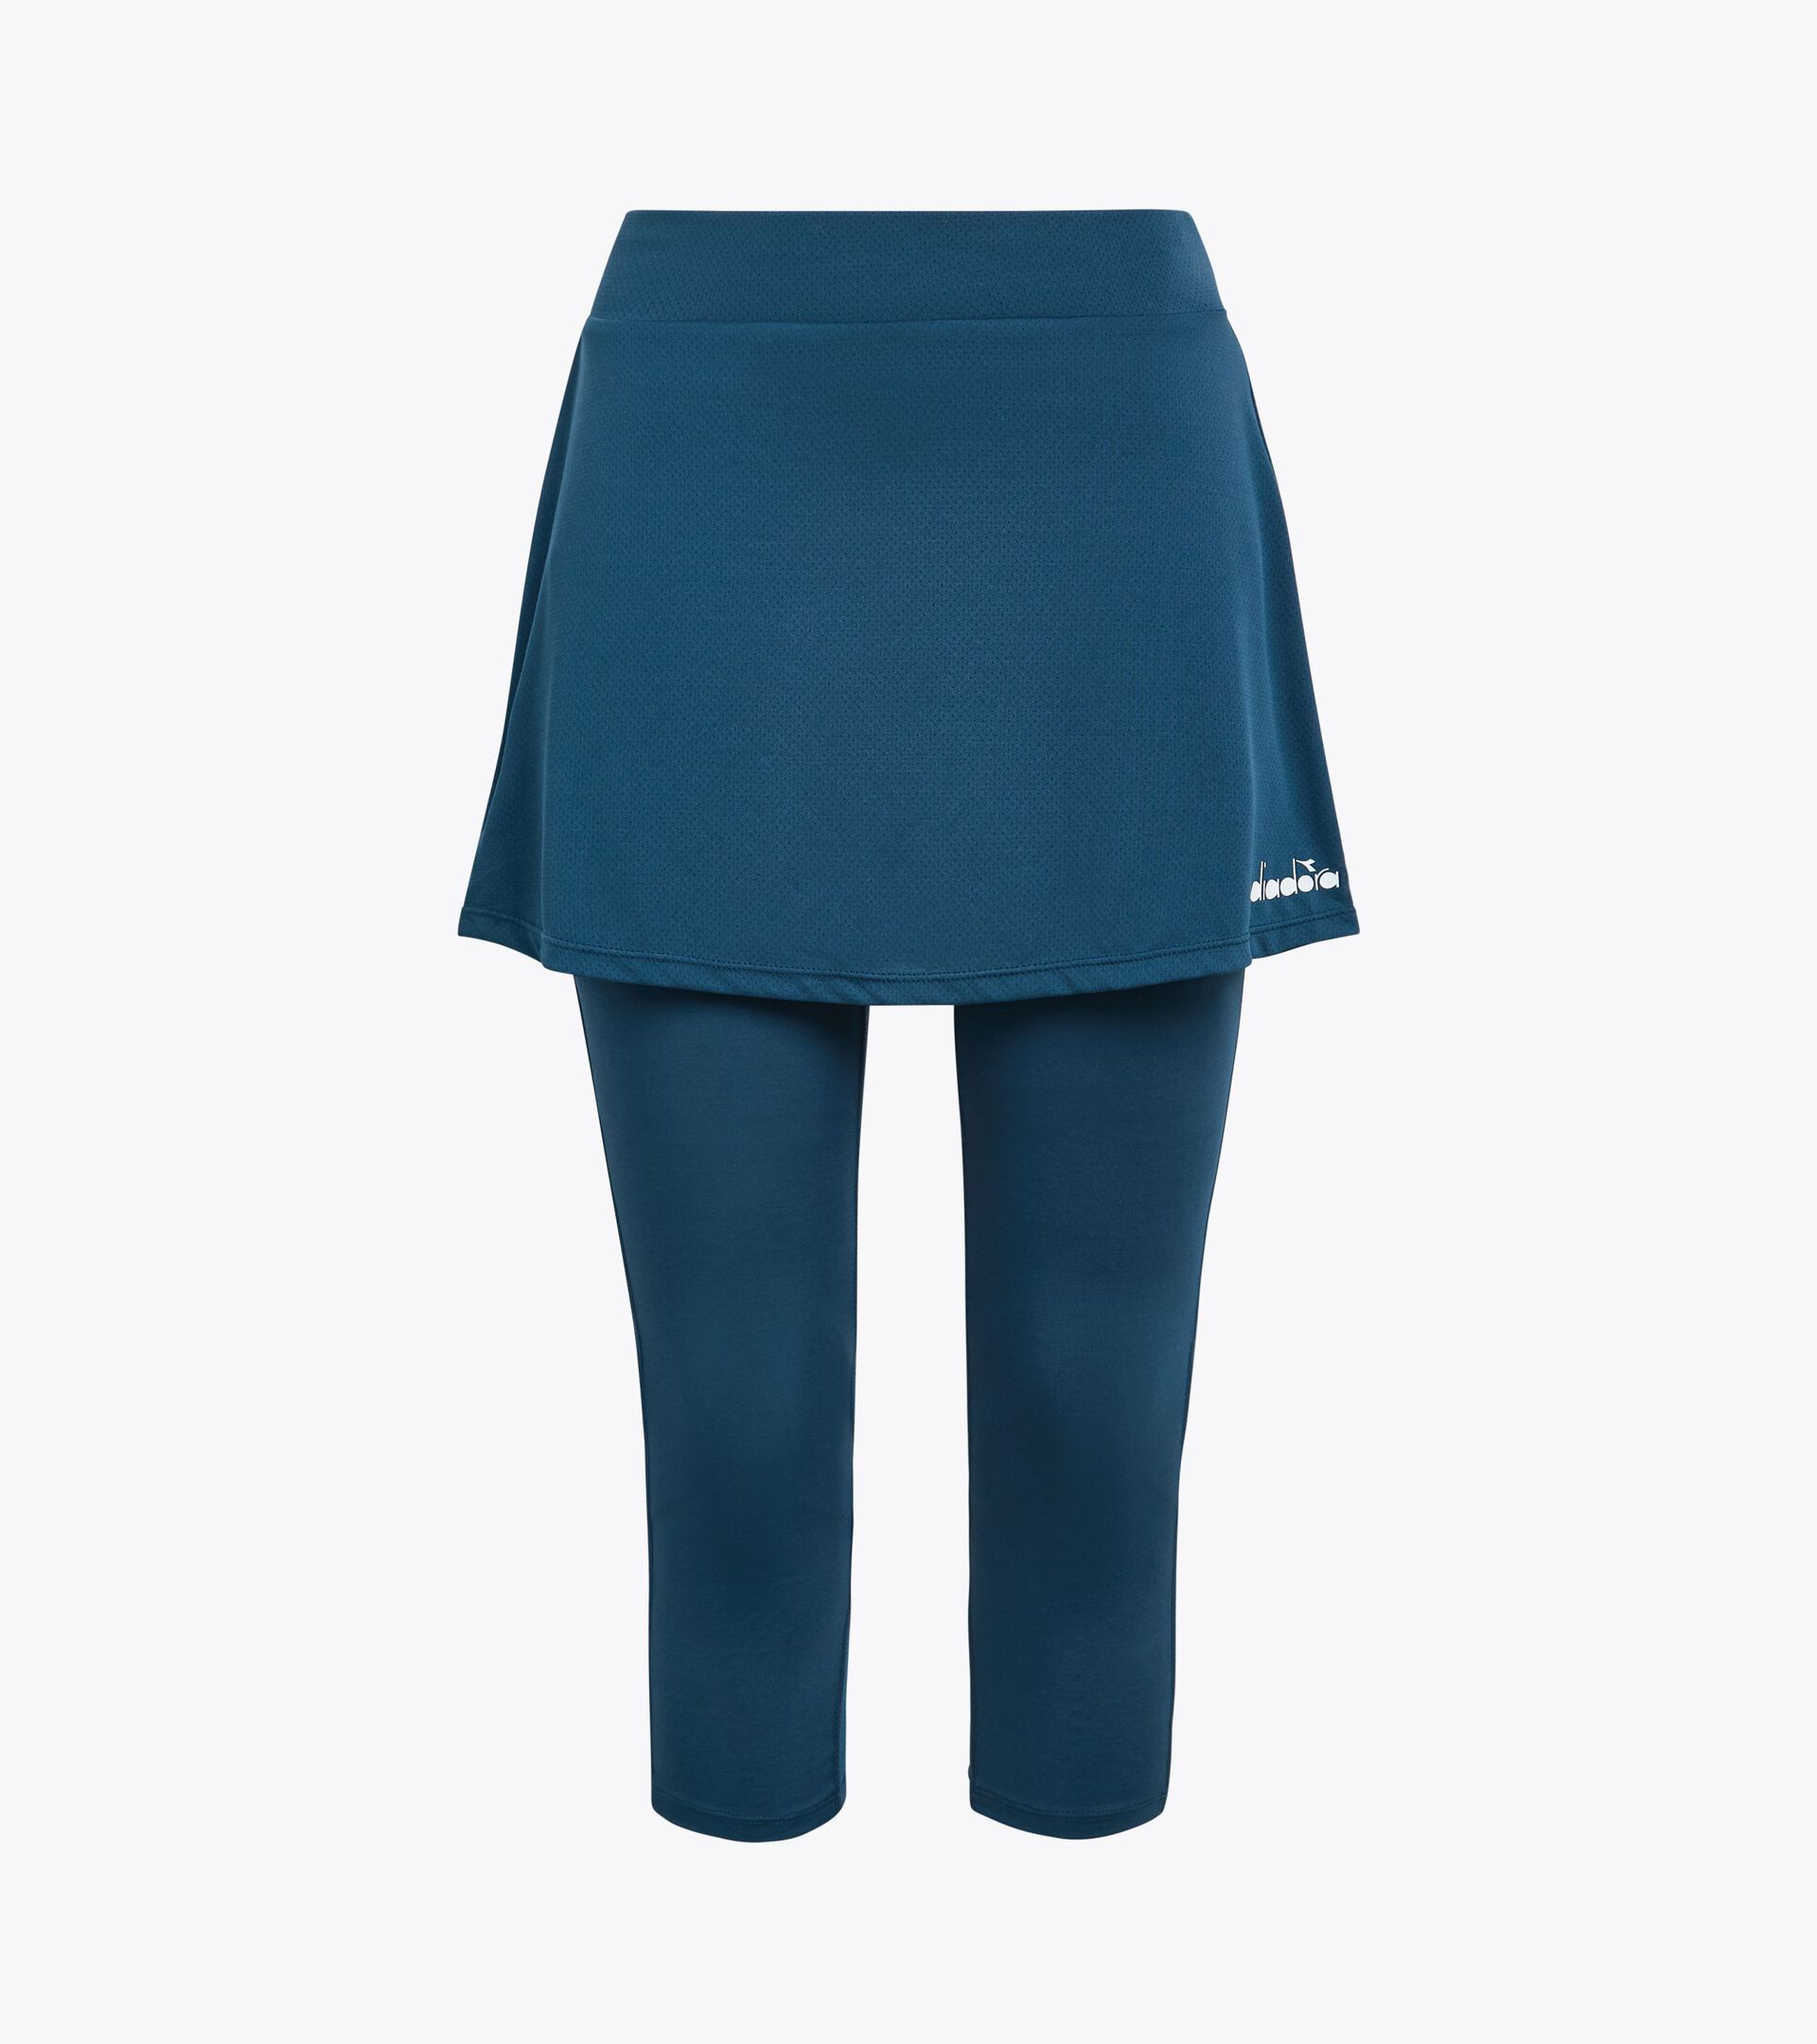 Tennis skirt with integrated 3/4-length leggings - Women’s
 L. POWER SKIRT LEGION BLUE - Diadora